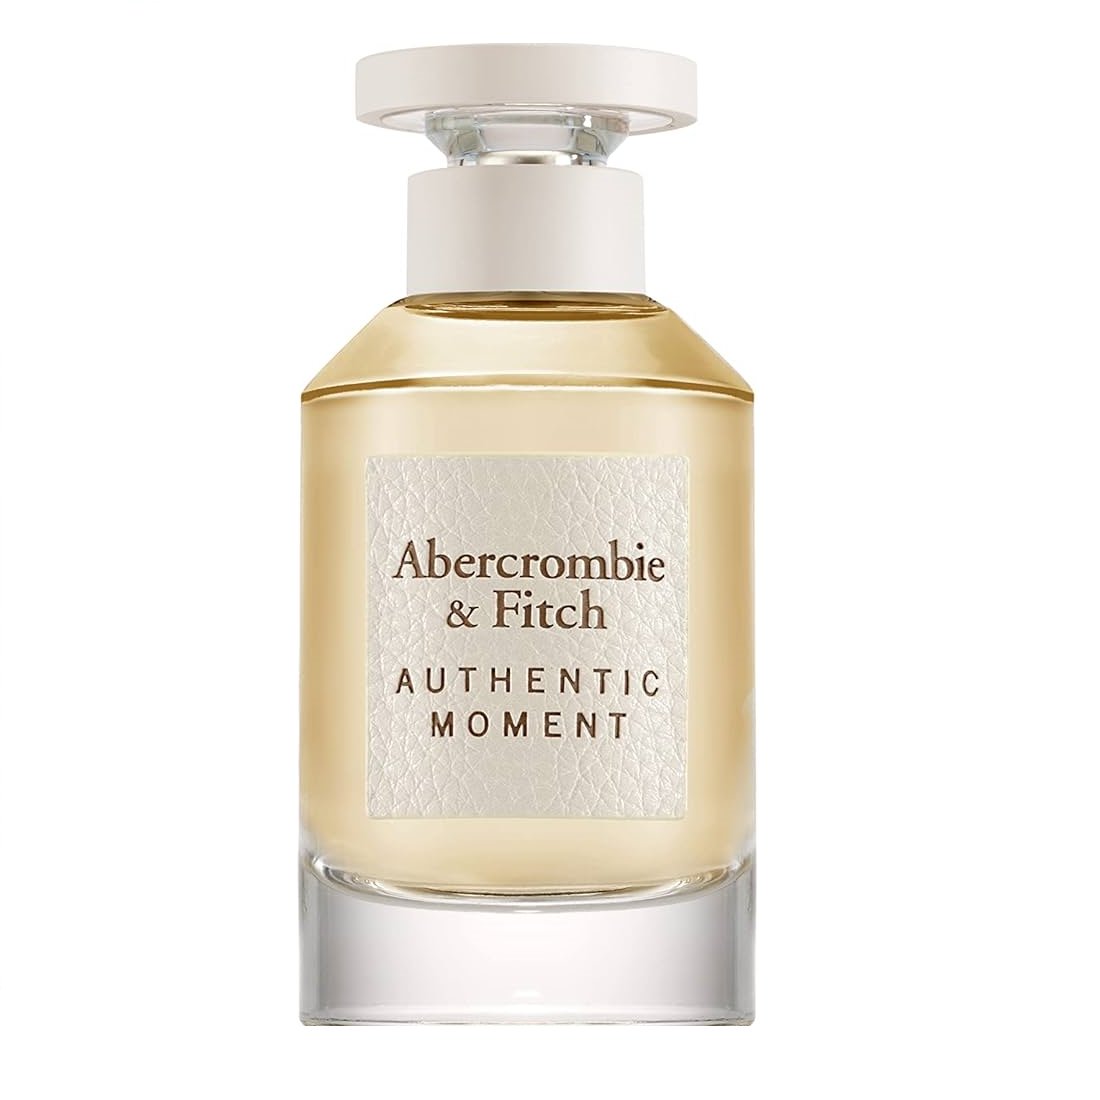 Abercrombie & Fitch Authentic Moment Woman Eau De Parfum Spray 50ml - LookincredibleAbercrombie & Fitch85715169617